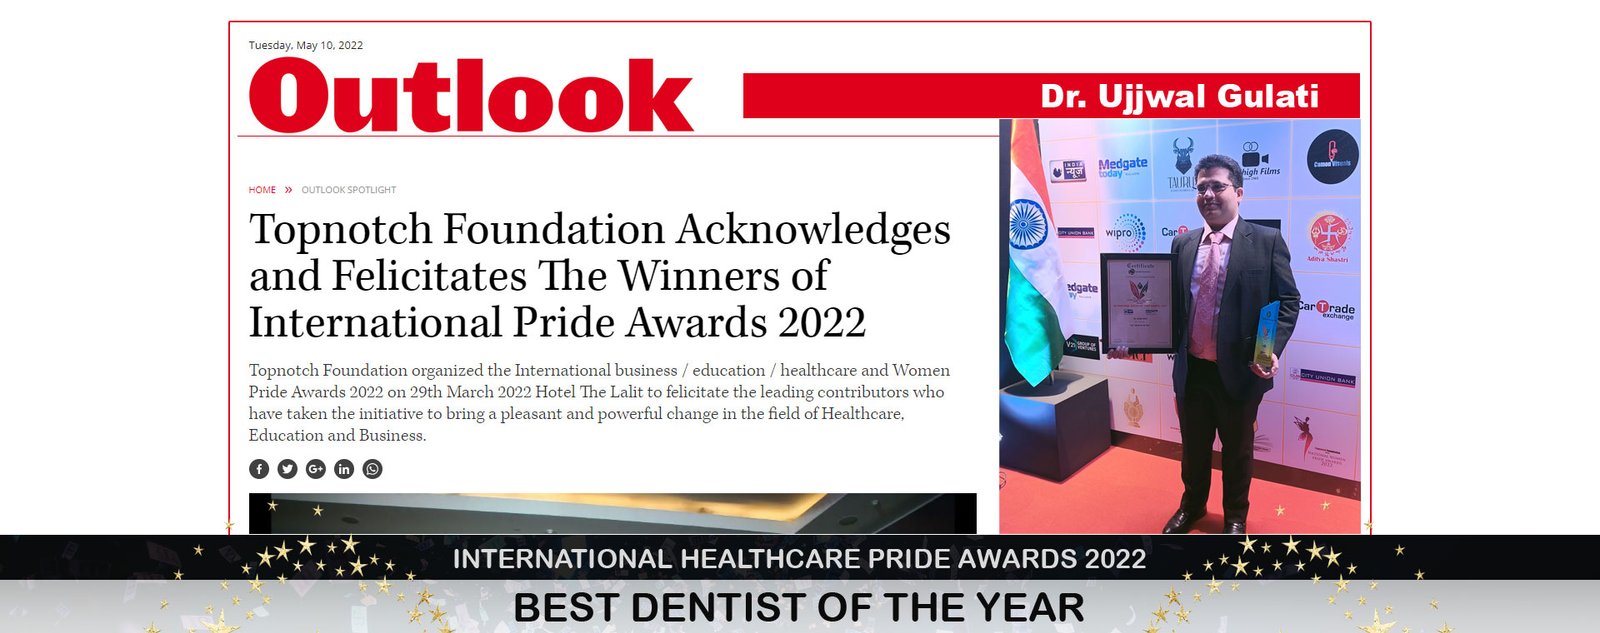 Outlook Magazine - Dr Ujjwal Gulati Best Dentist 2022 India